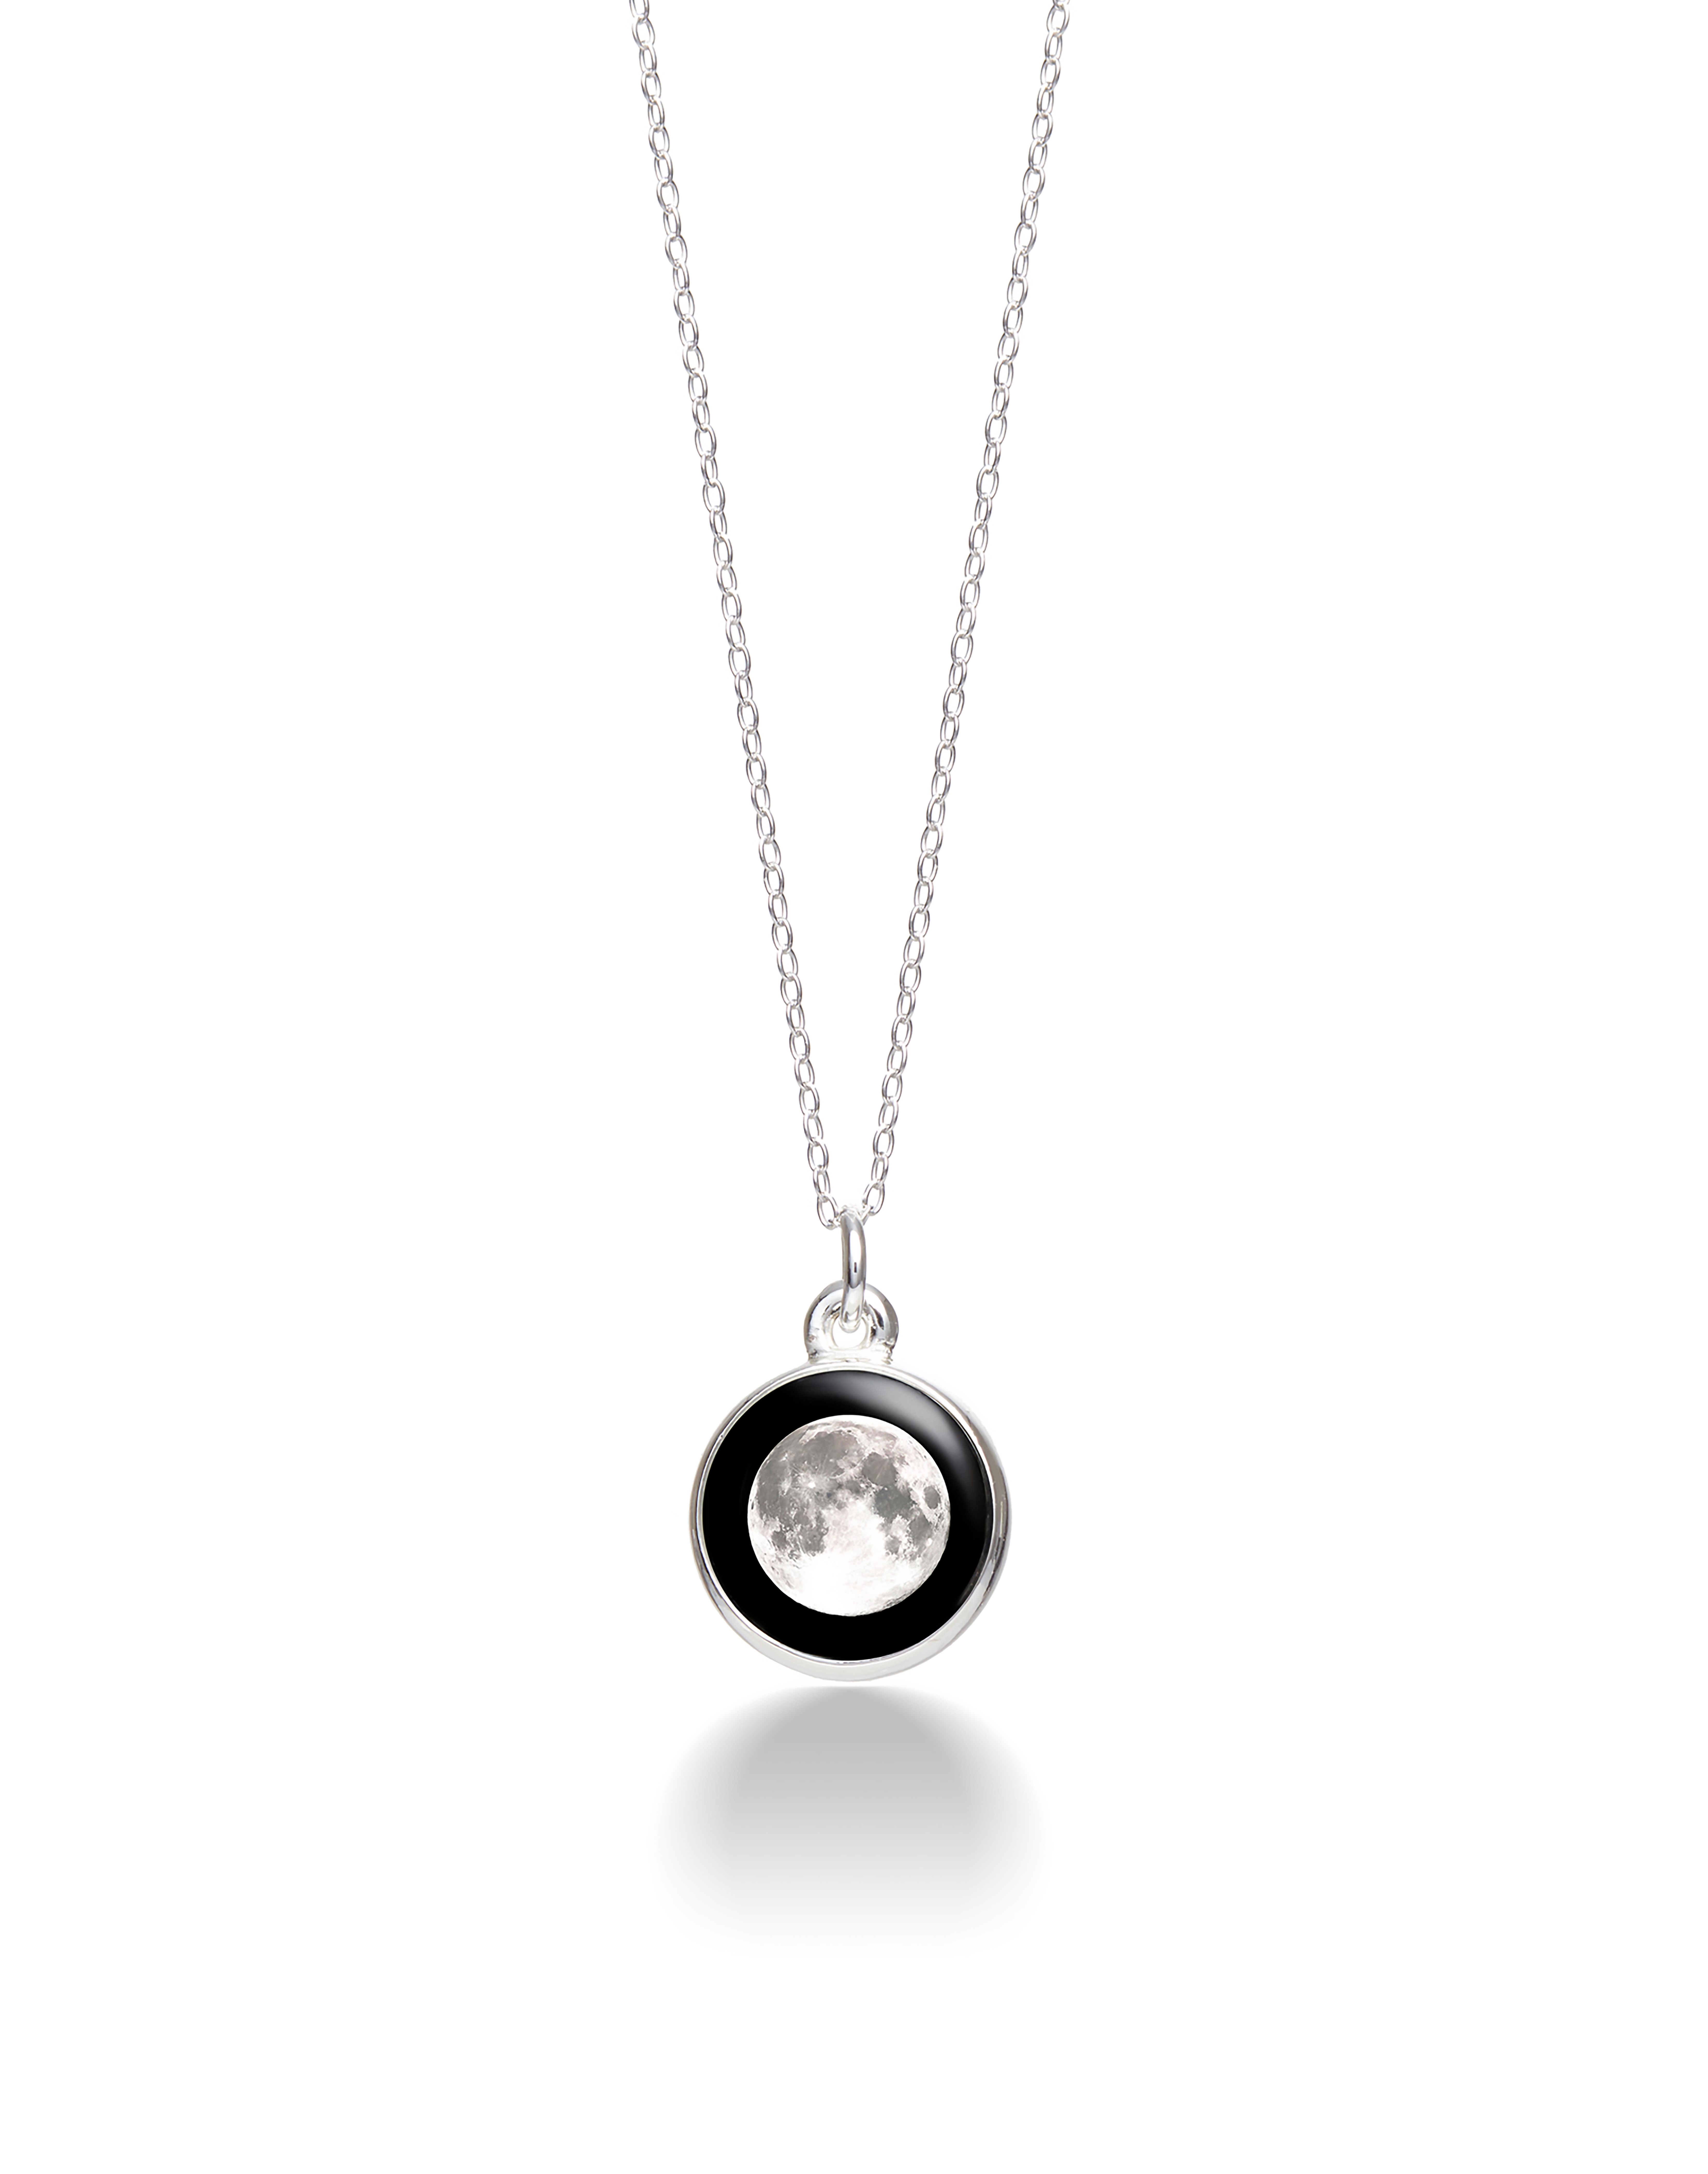 Moonlight Meteor Necklace in Silver